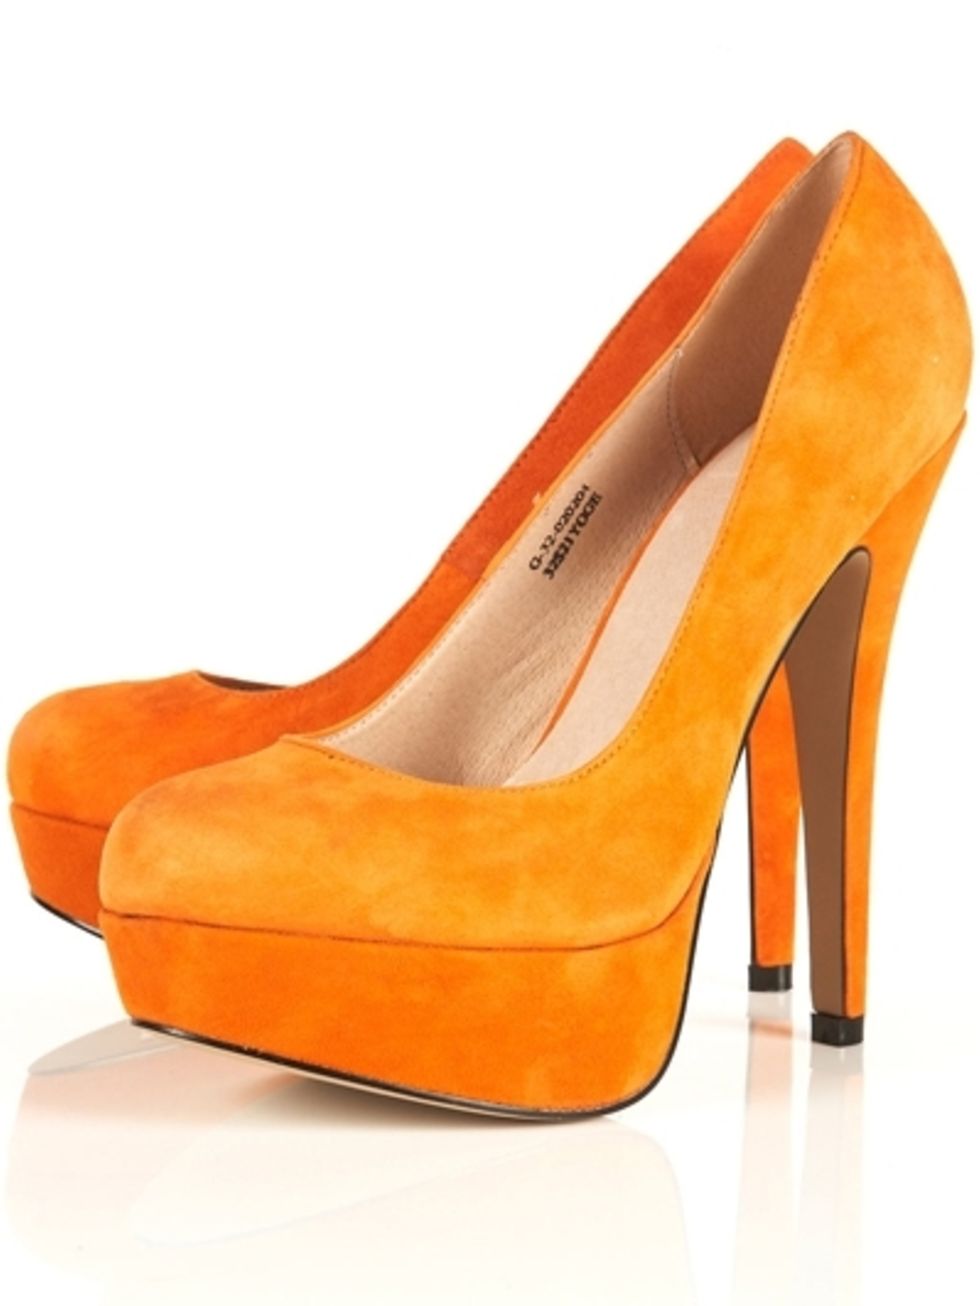 Footwear, Brown, High heels, Orange, Basic pump, Amber, Tan, Fashion, Sandal, Beige, 